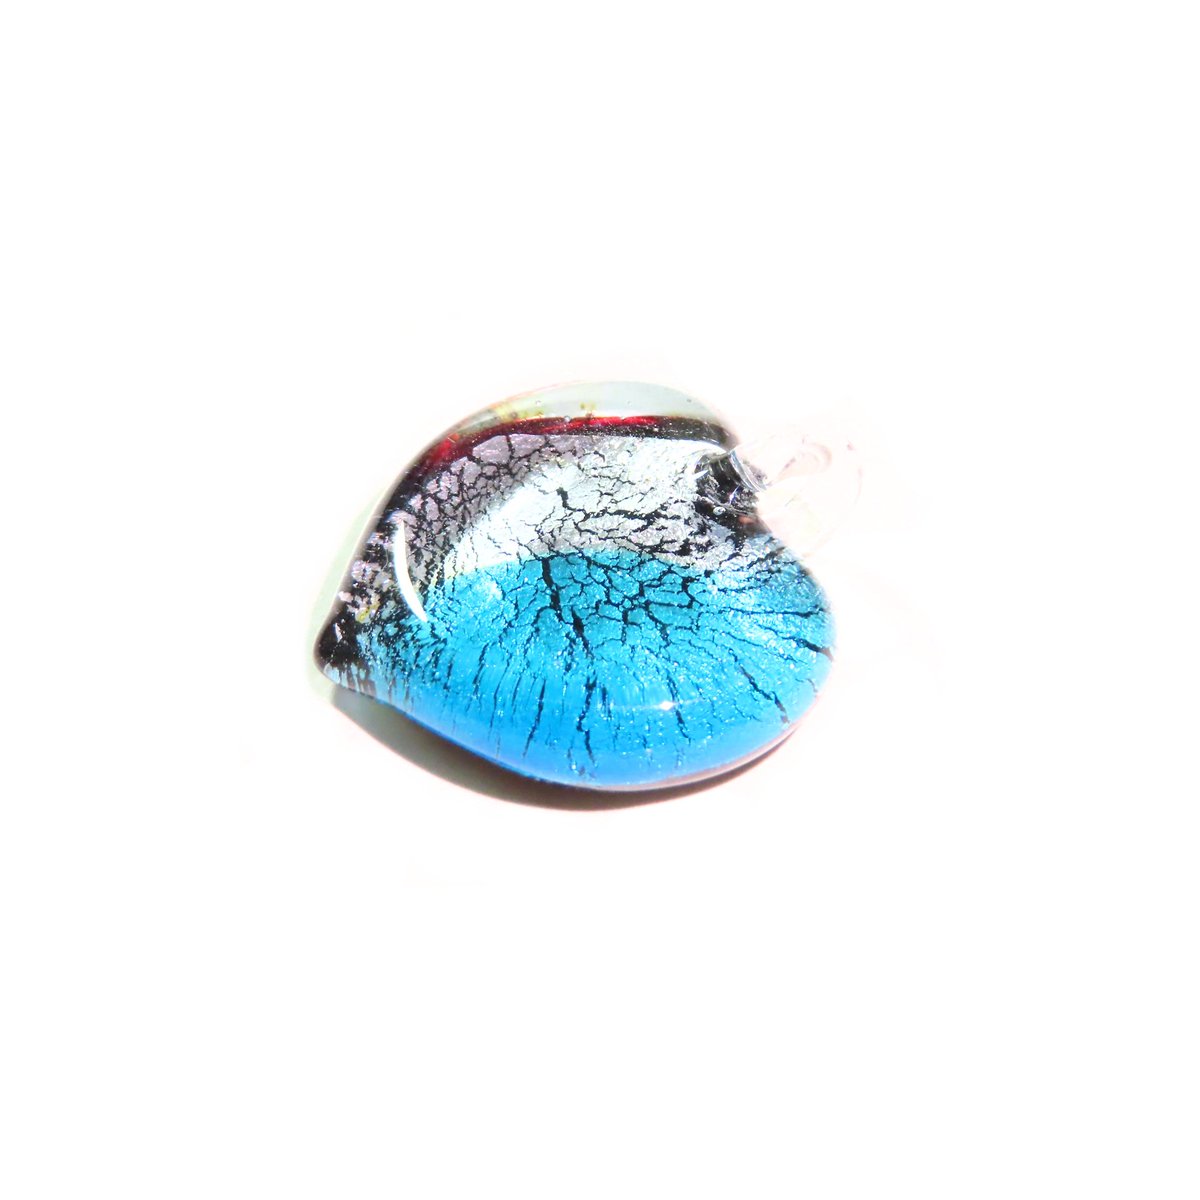 Murano Glass Heart Pendant Necklace, Aqua Black, JKC Murano tuppu.net/5ead5c78 #jewelry #JKCMurano #Murano #MuranoGlass